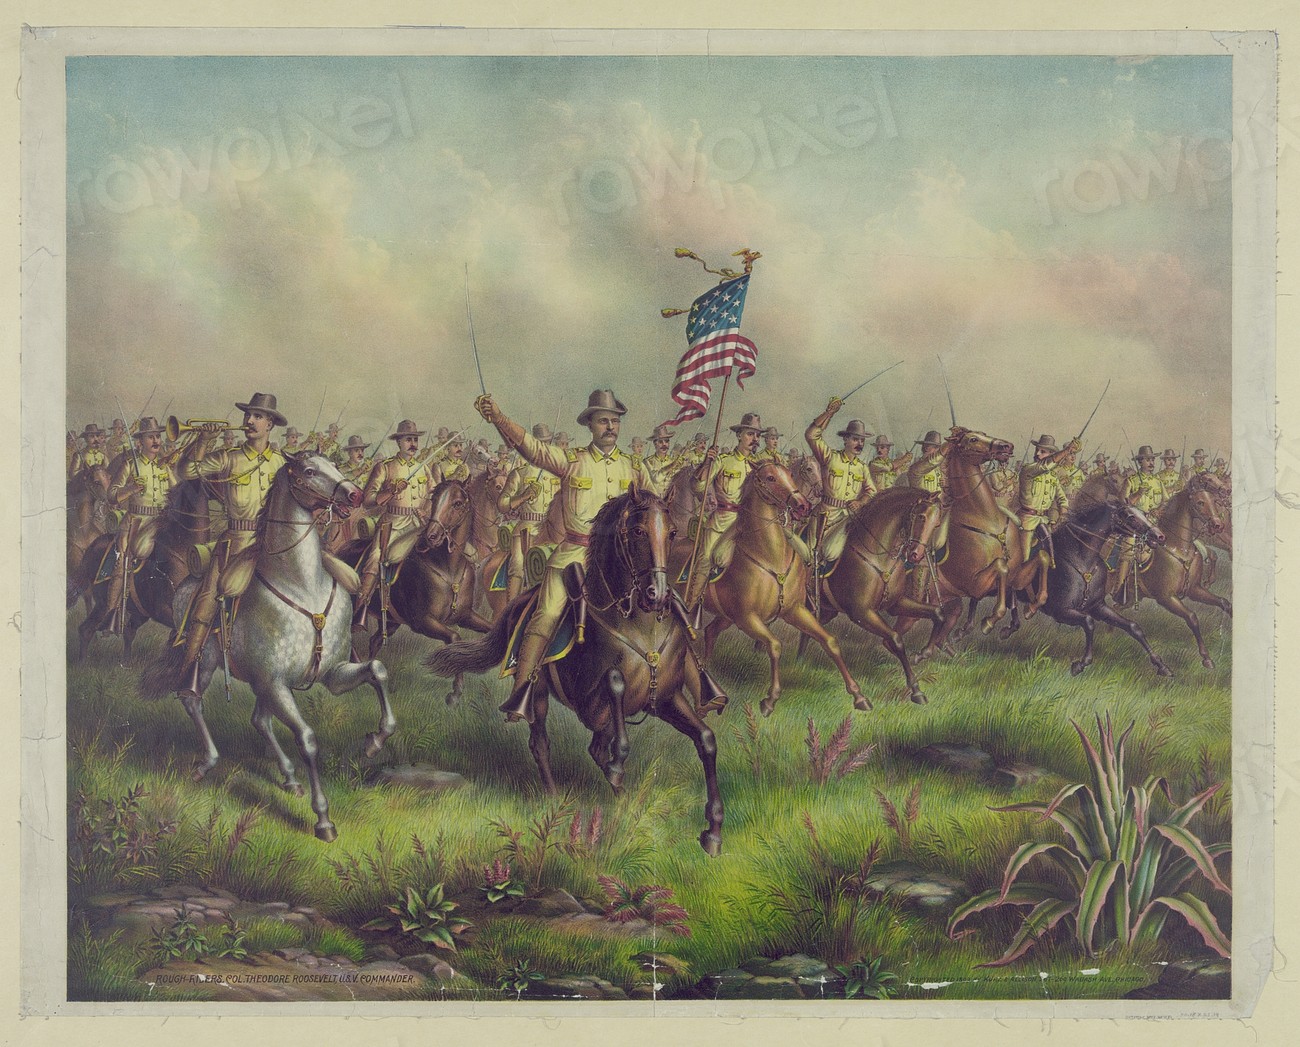 Rough-Riders, Col. Theodore Roosevelt, U.S.V